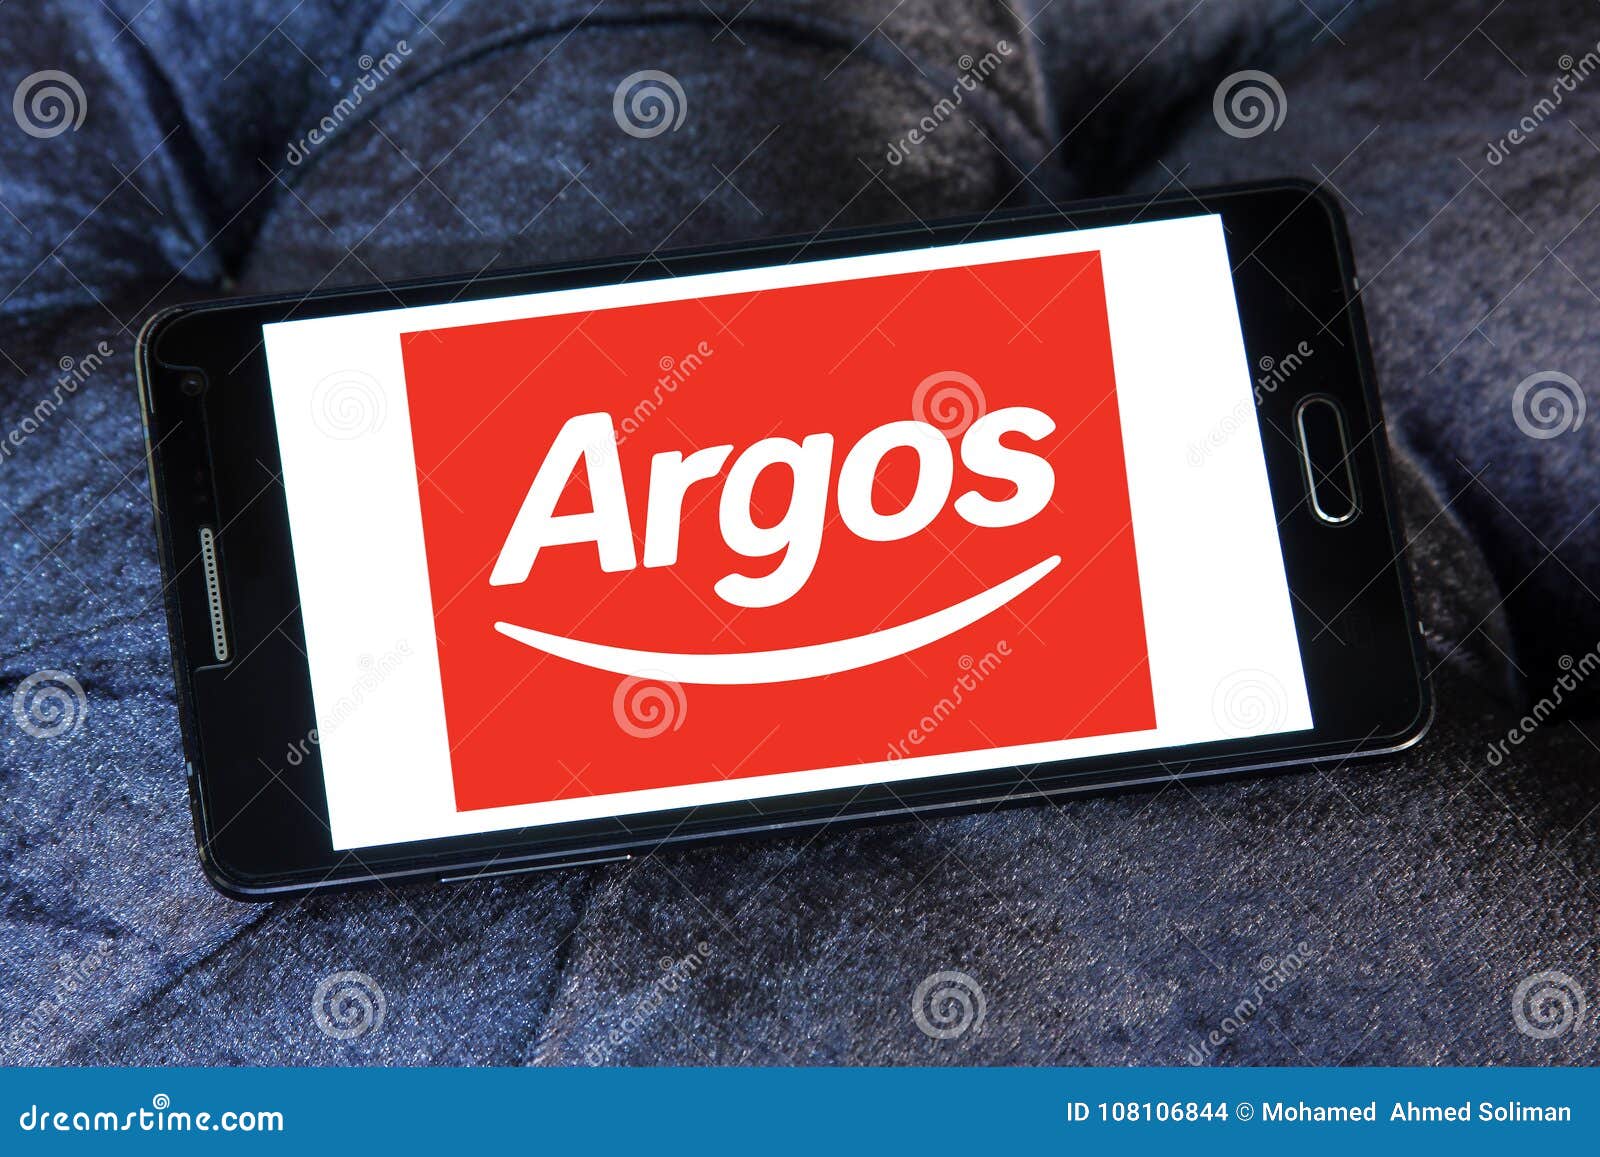 Argos retailer logo editorial stock image. Image of illustrative